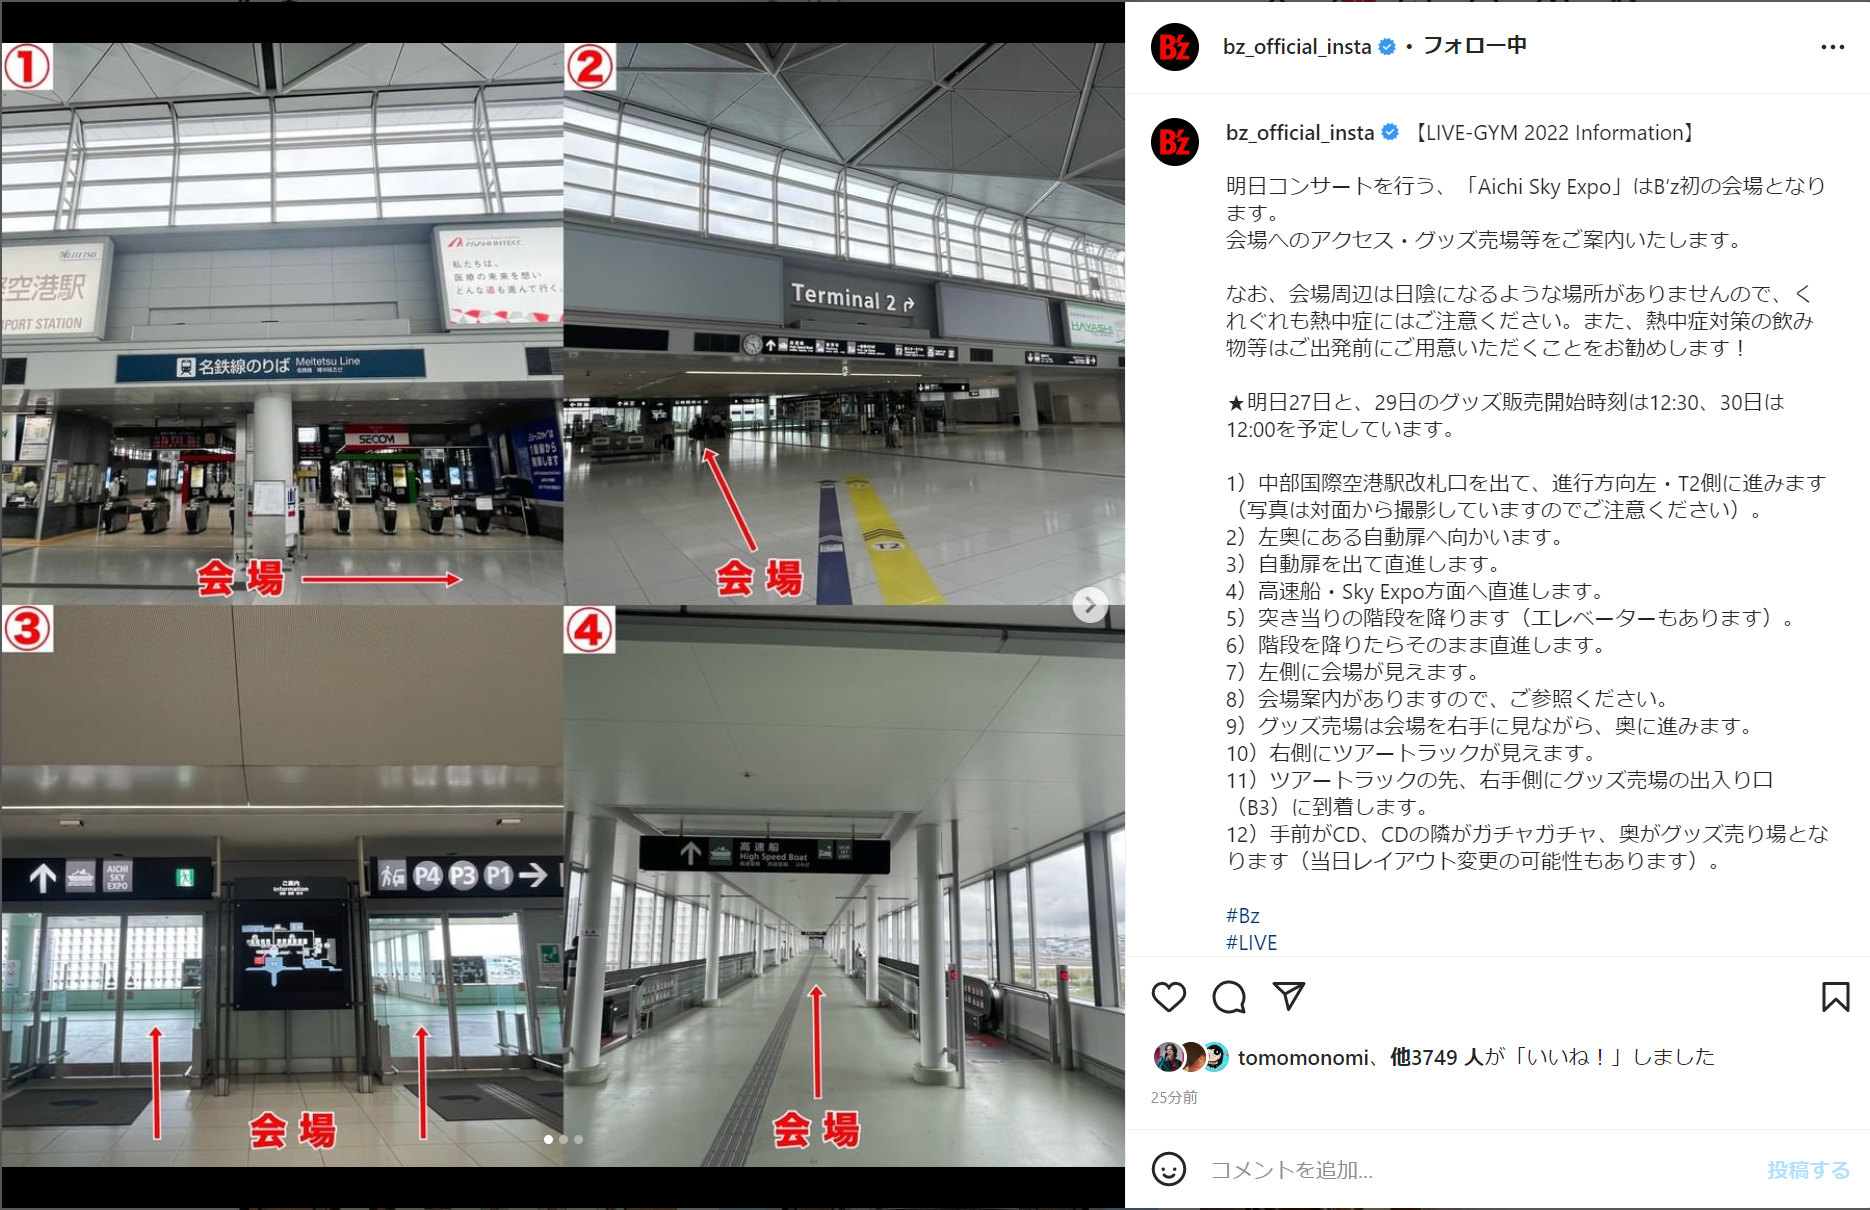 B'z公式Instagramで公開されたAichi Sky Expo(愛知県国際展示場) の会場アクセス解説投稿のキャプチャ画像